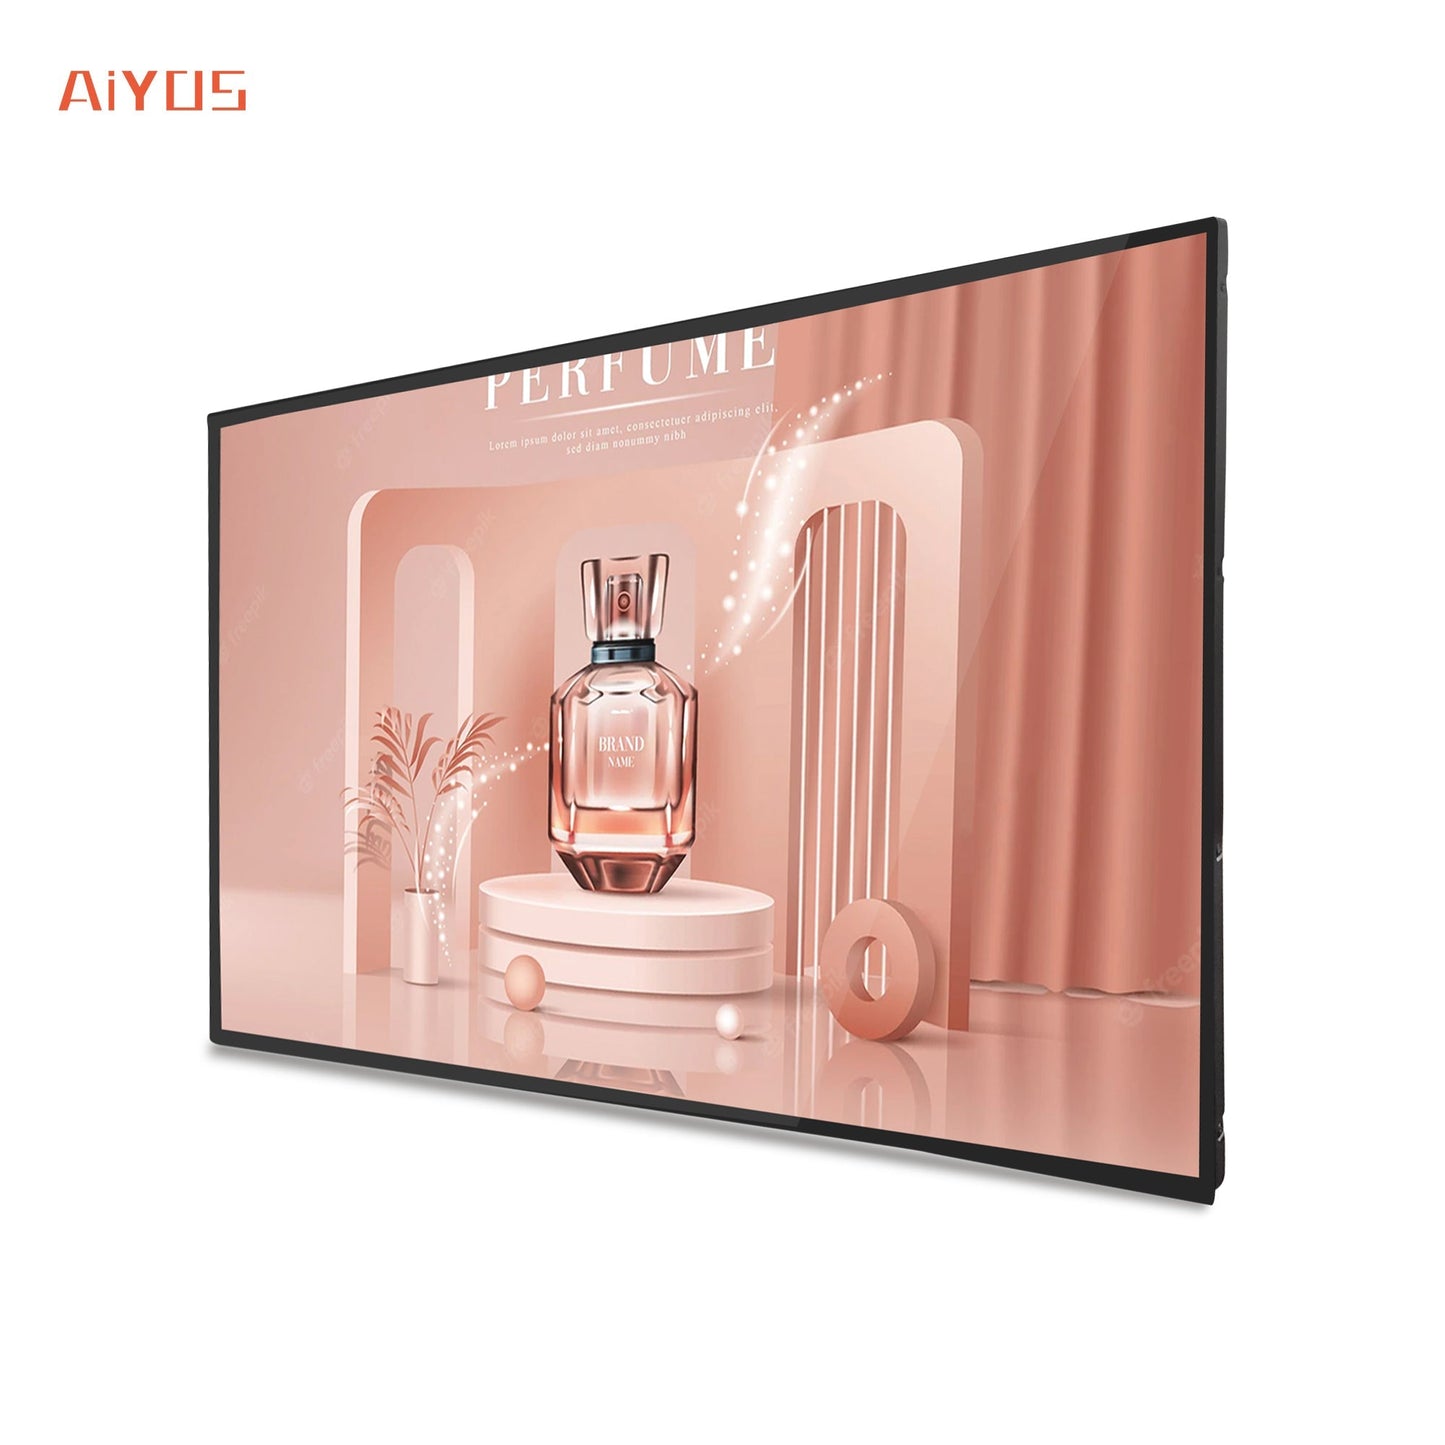 43 Inch Full HD 1080P Ultra Thin Monitor Board Wall Mount Digital Signage LCD Panel Display Menu Indoor Advertising Screen